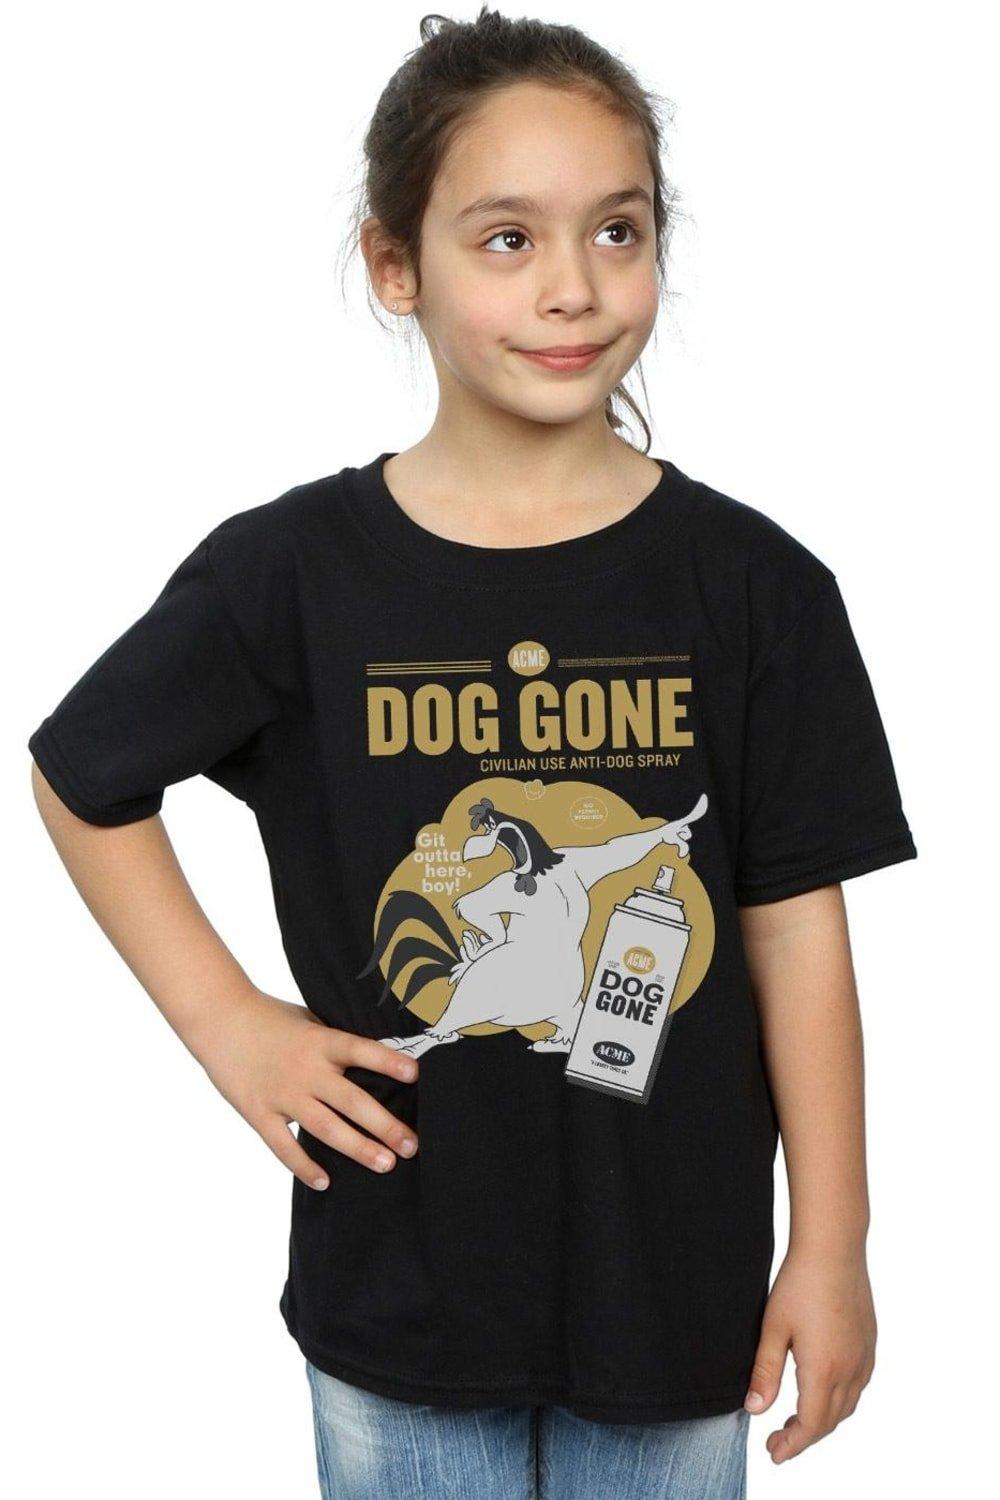 Foghorn Leghorn Dog Gone Cotton T-Shirt